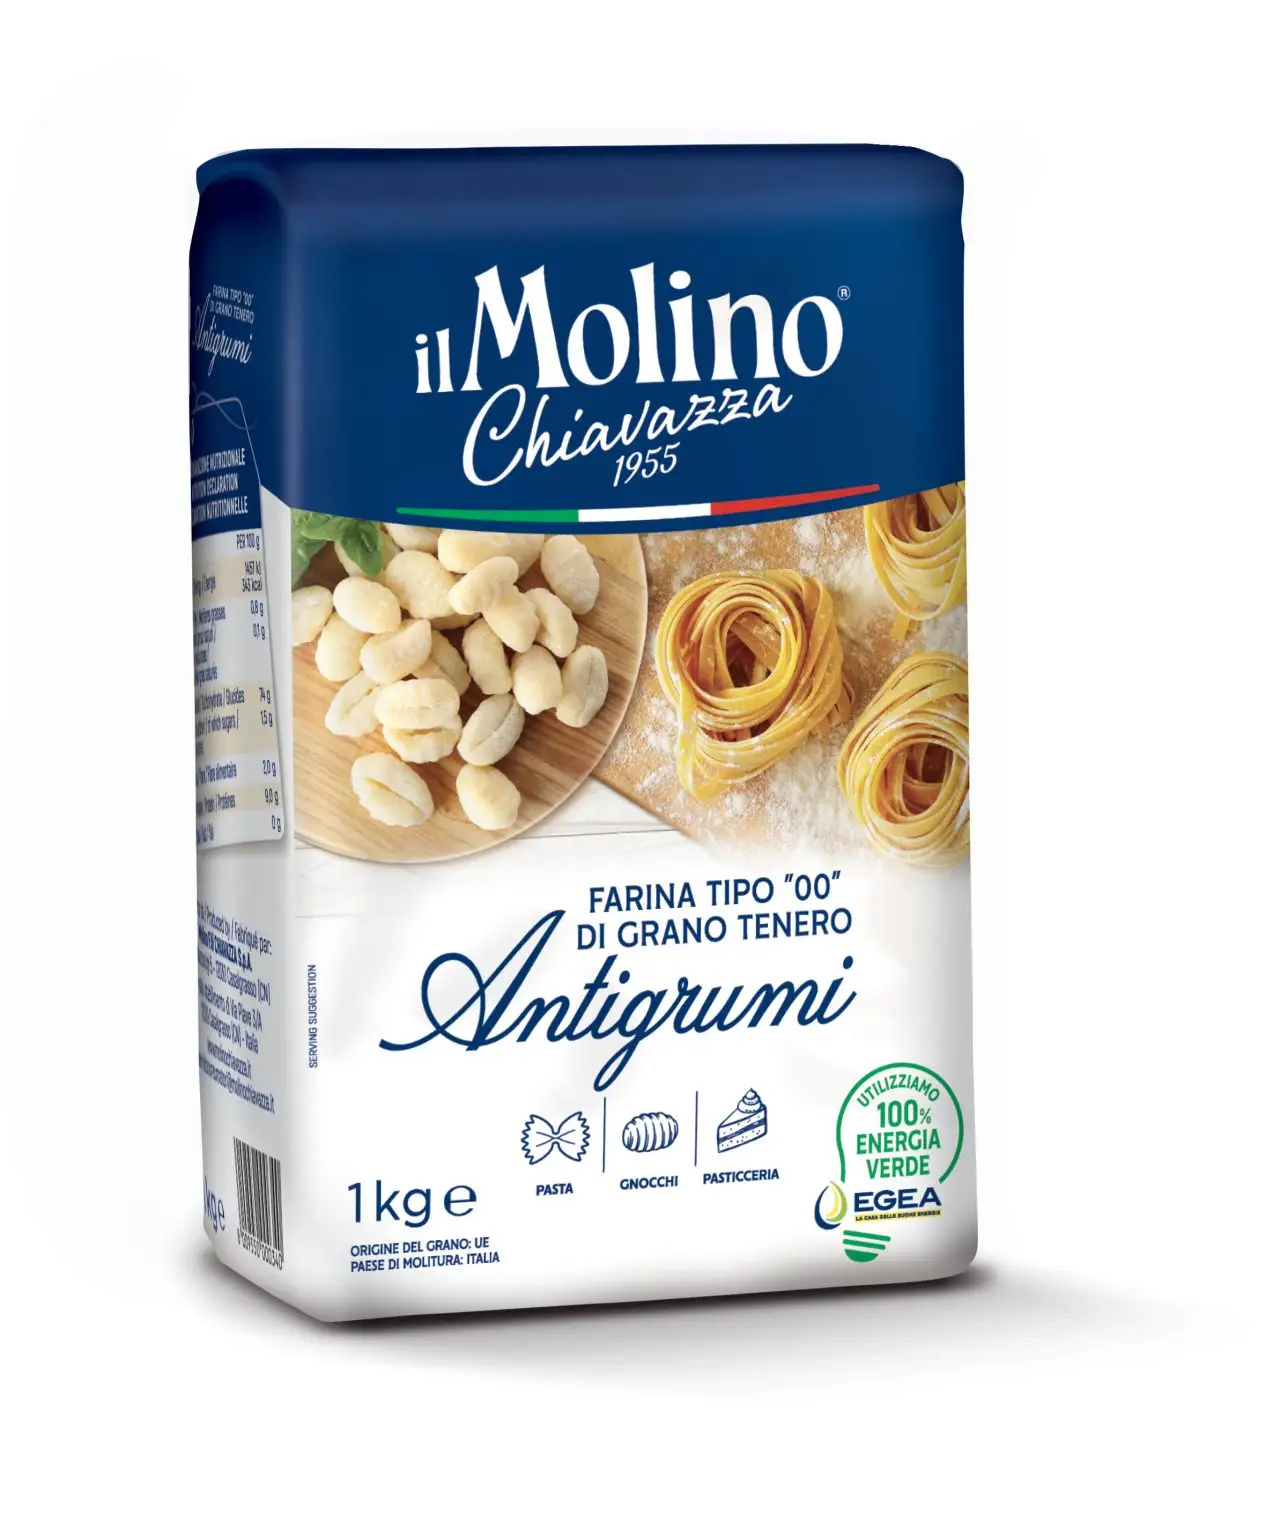 Tepung gandum lembut 100% alami berkualitas tinggi 00 ANTIGRUMI Ideal untuk penggunaan profesional buatan Italia